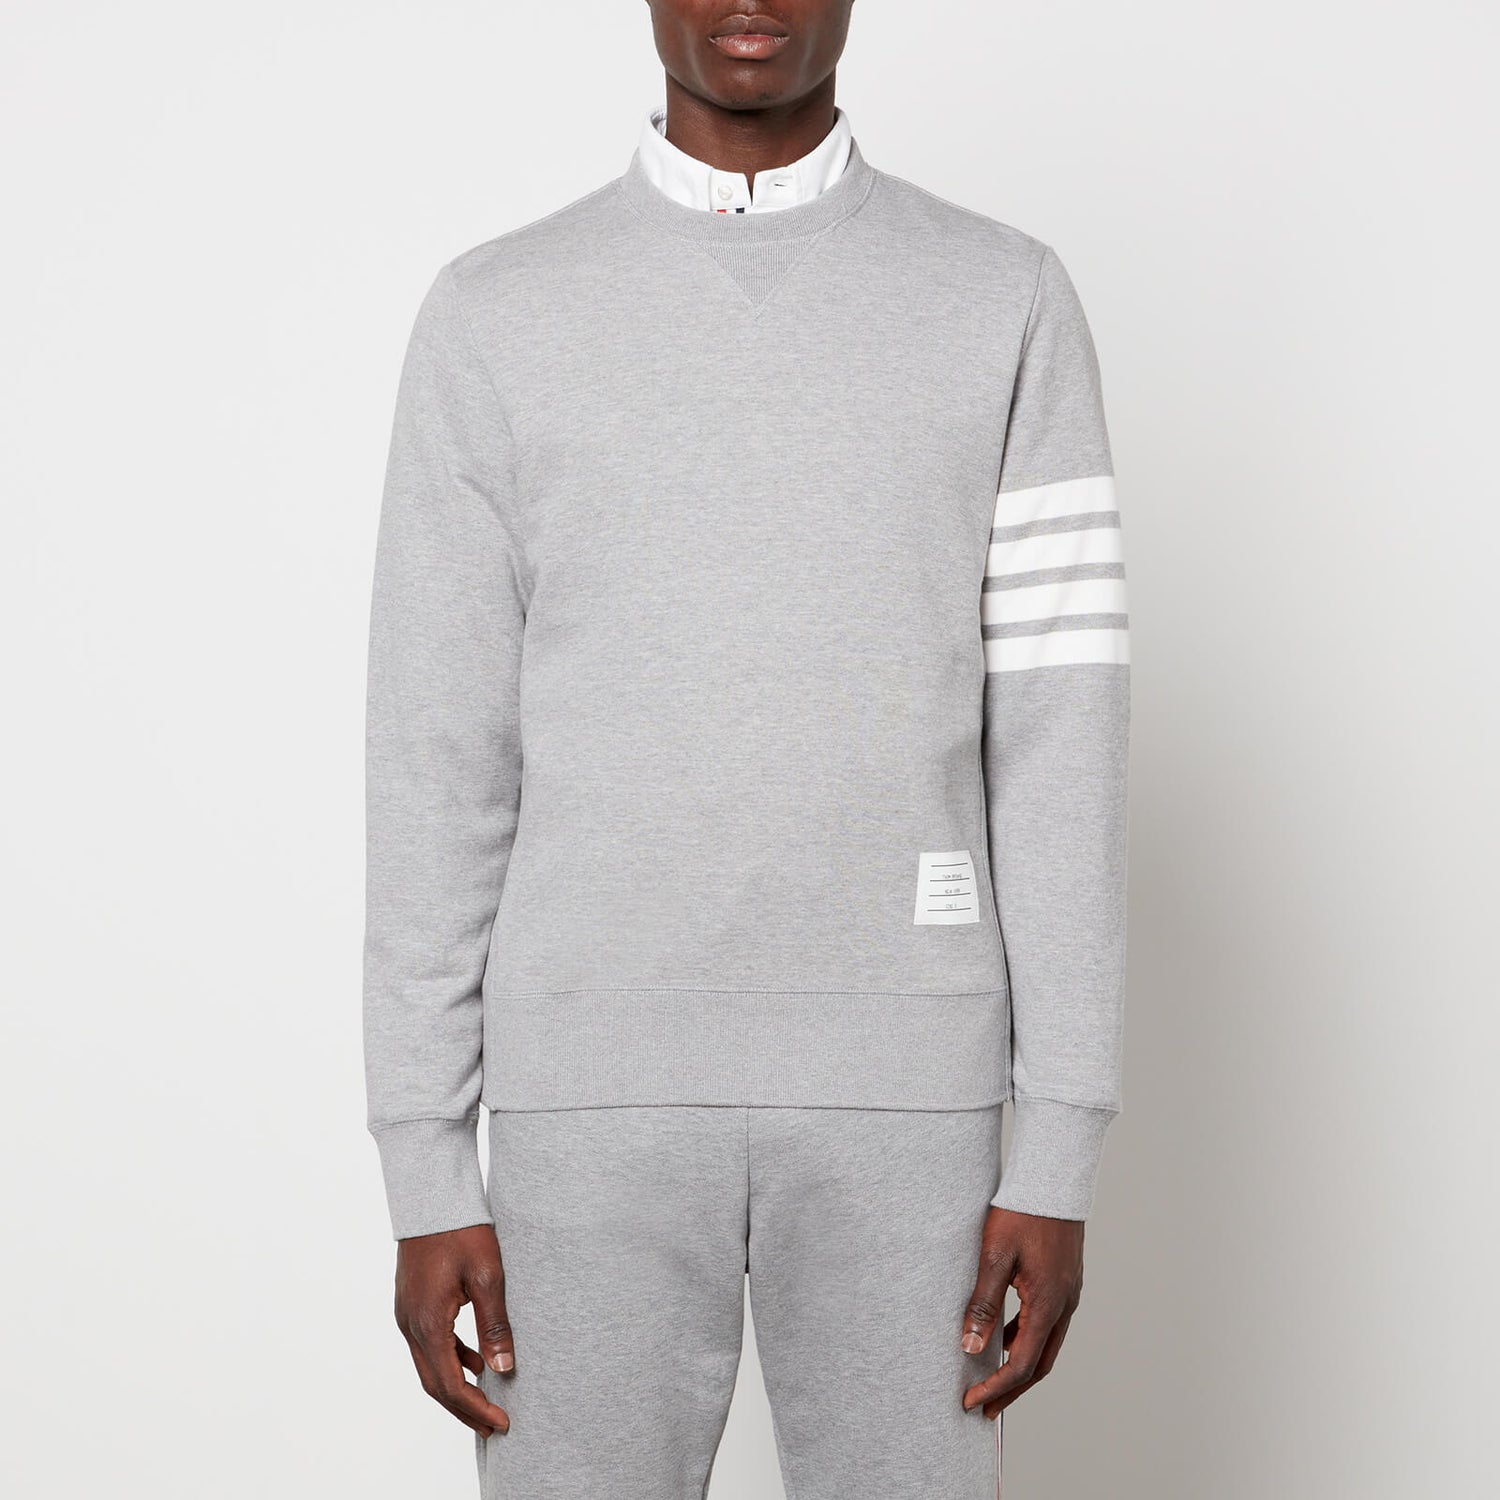 Thom Browne Men's 4-Bar Classic Sweatshirt - Light Grey - 1/S